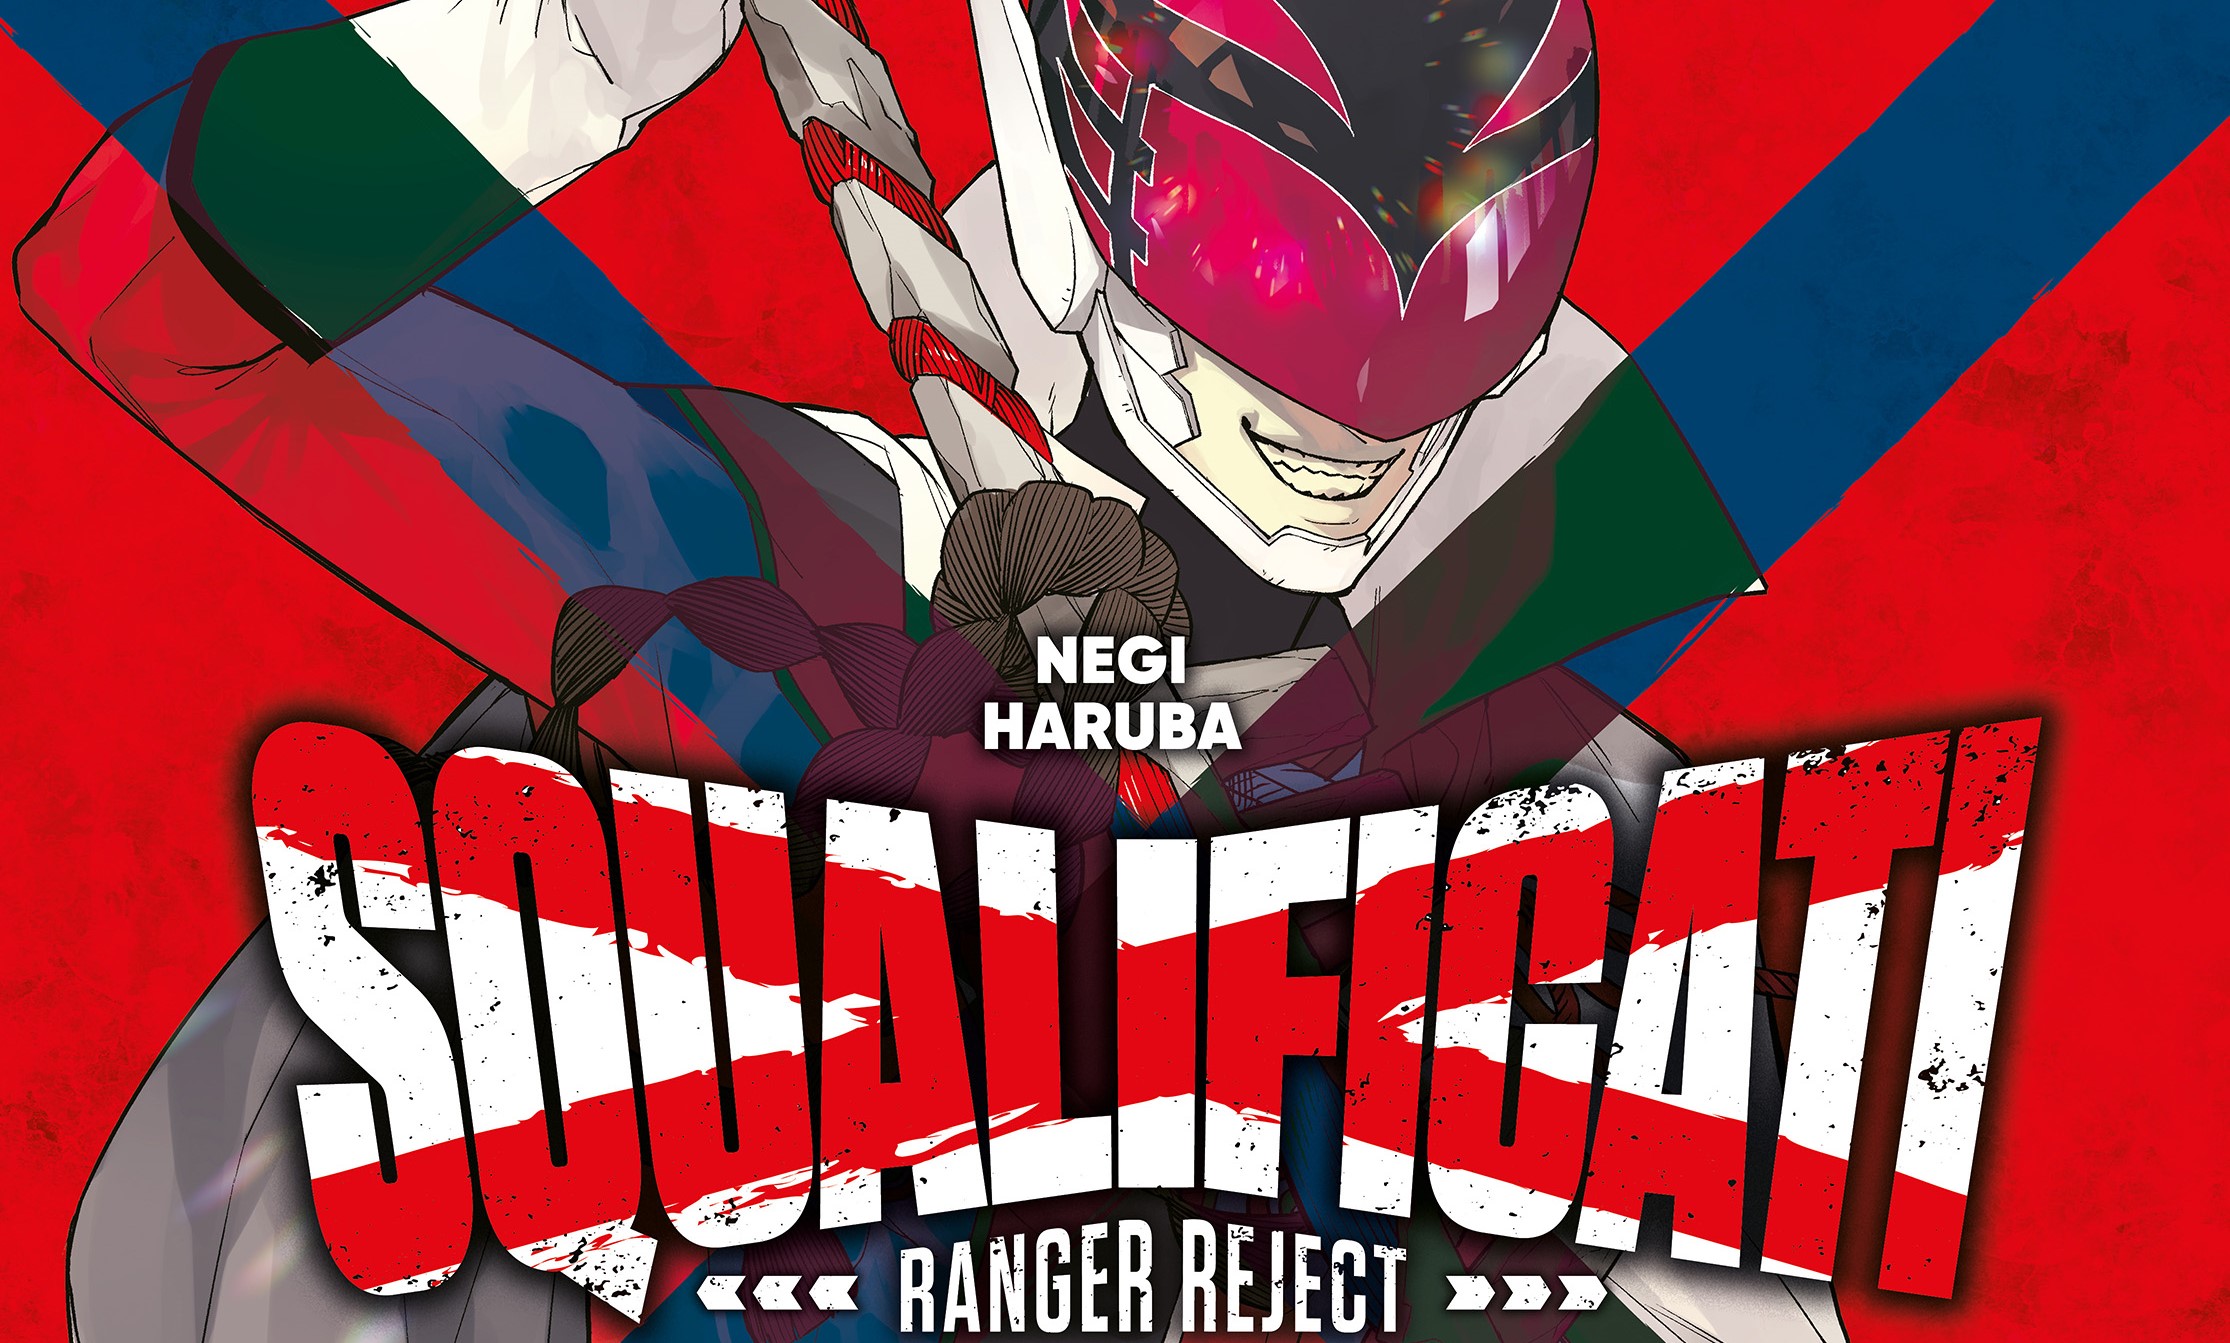 Squalificati - Ranger Reject in arrivo per J-POP Manga